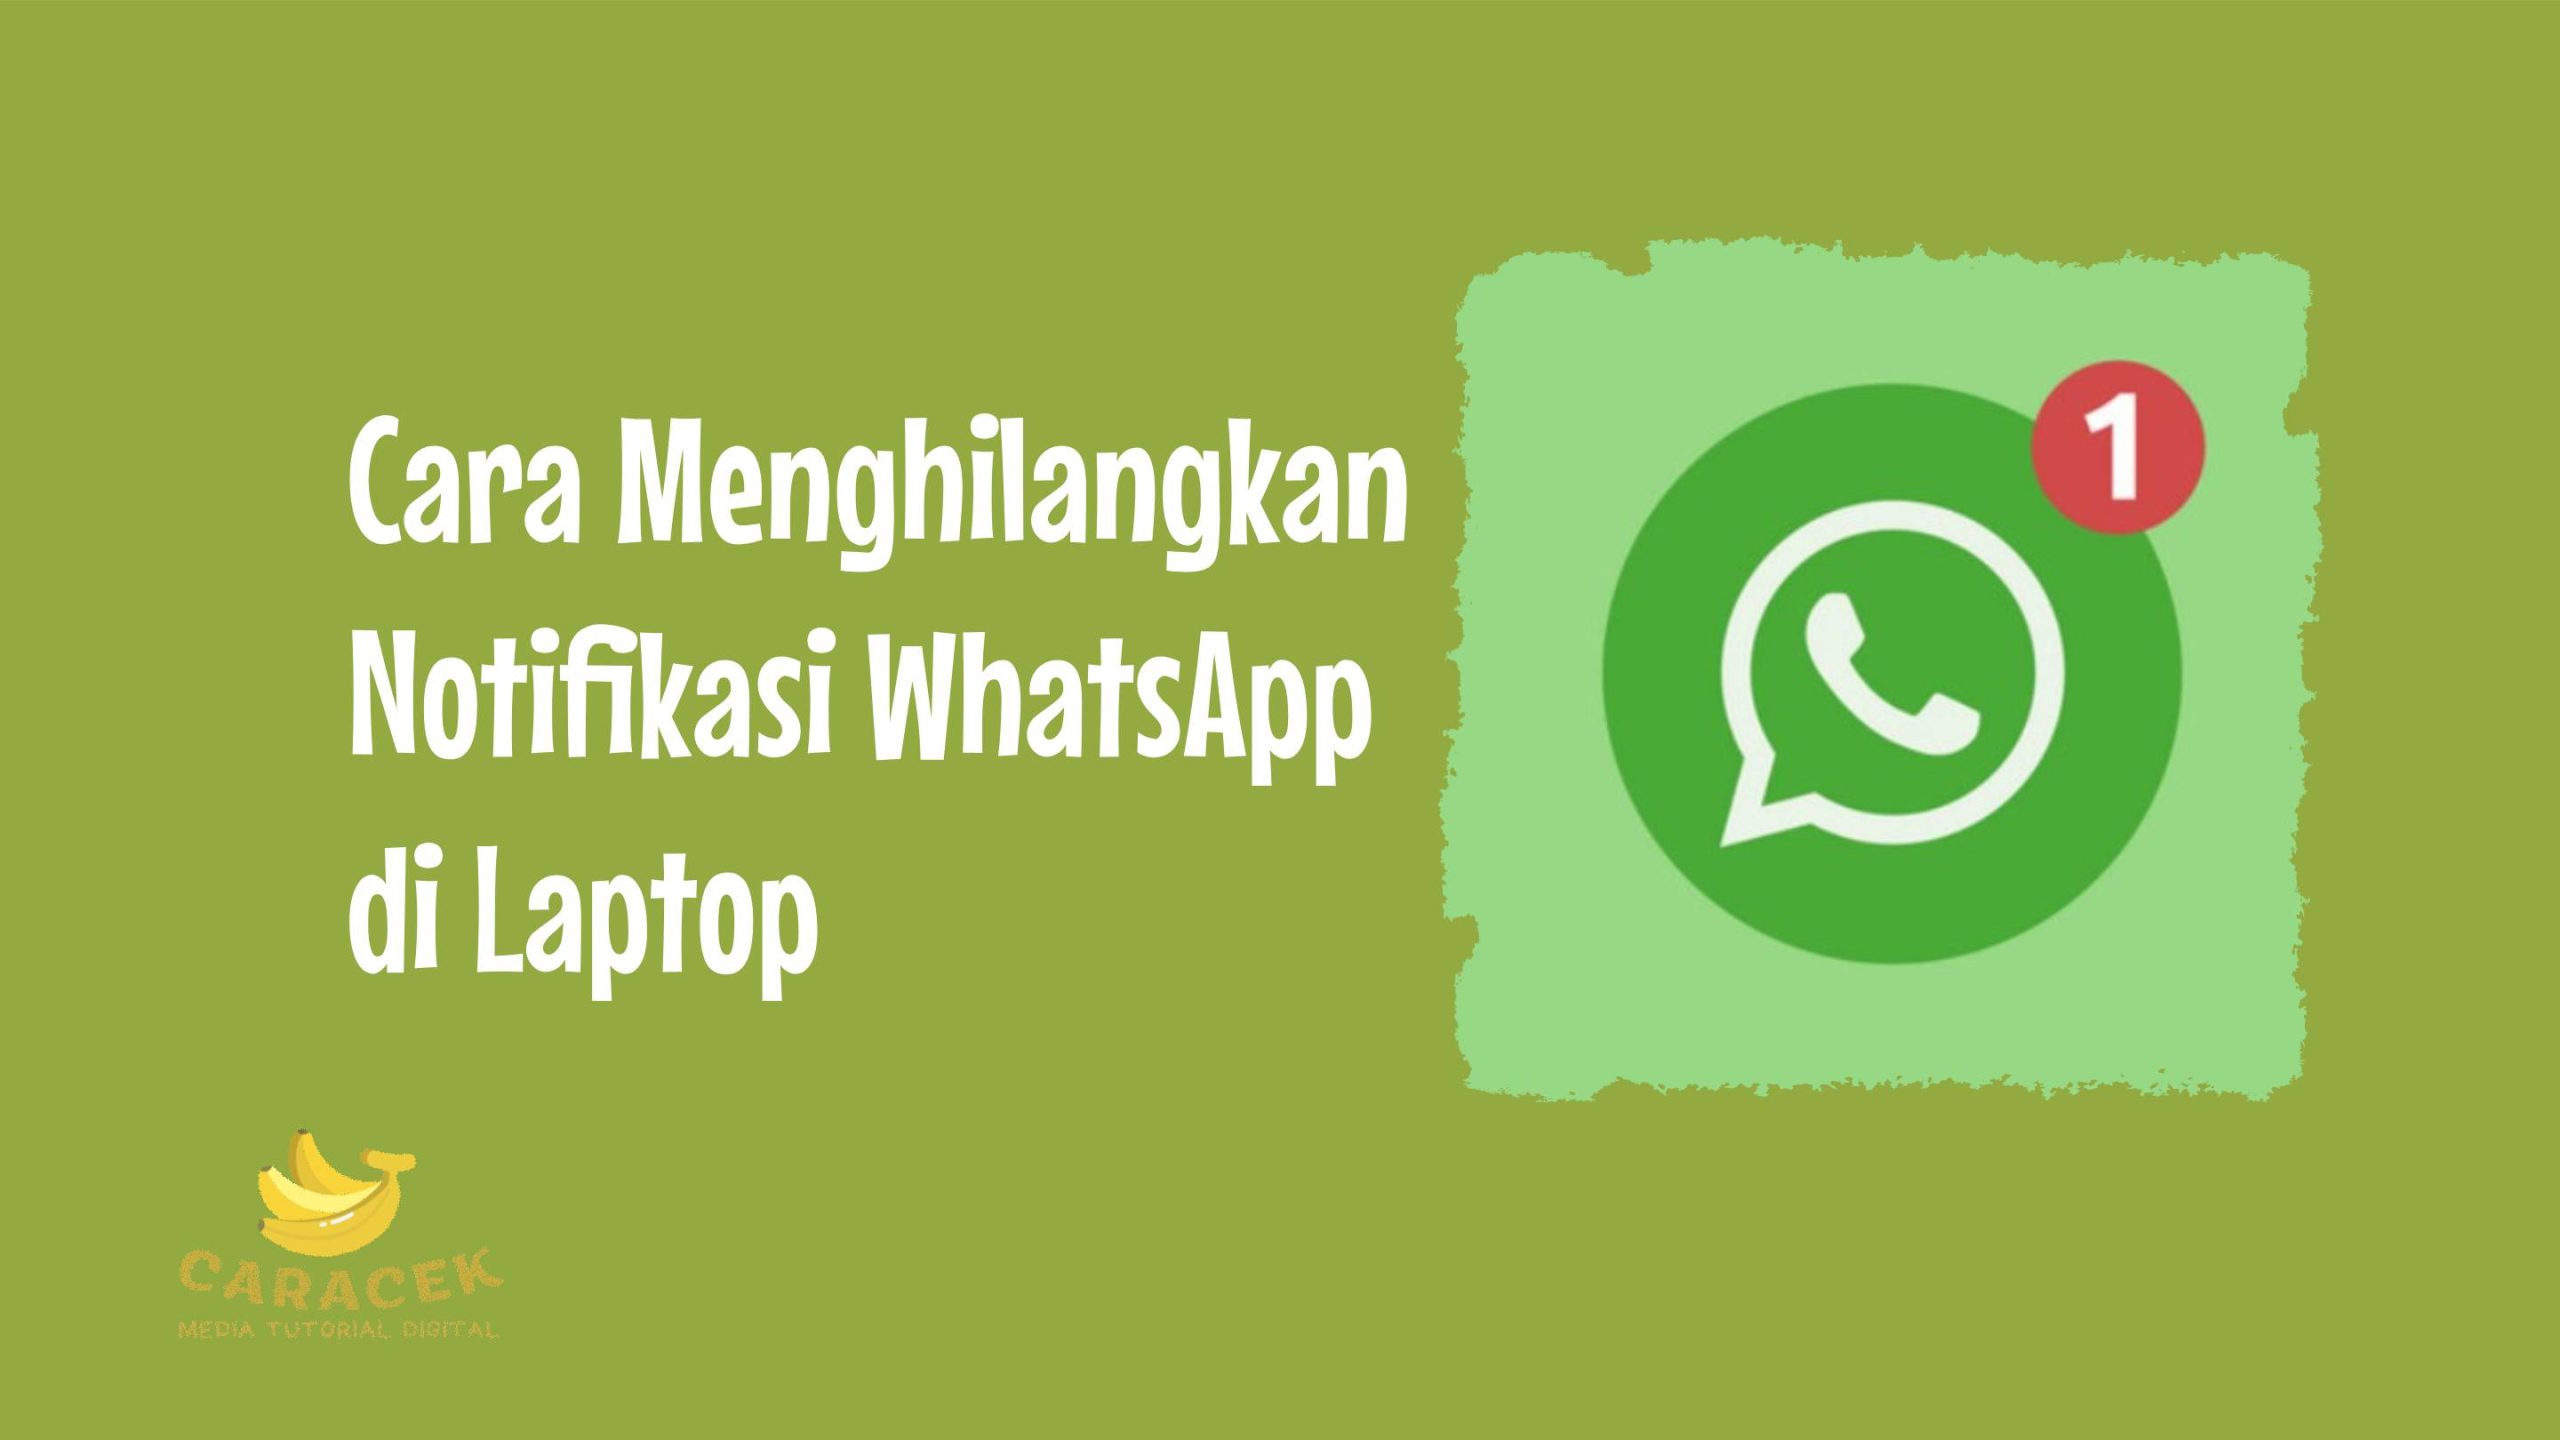 Cara Menghilangkan Notifikasi WhatsApp di Laptop